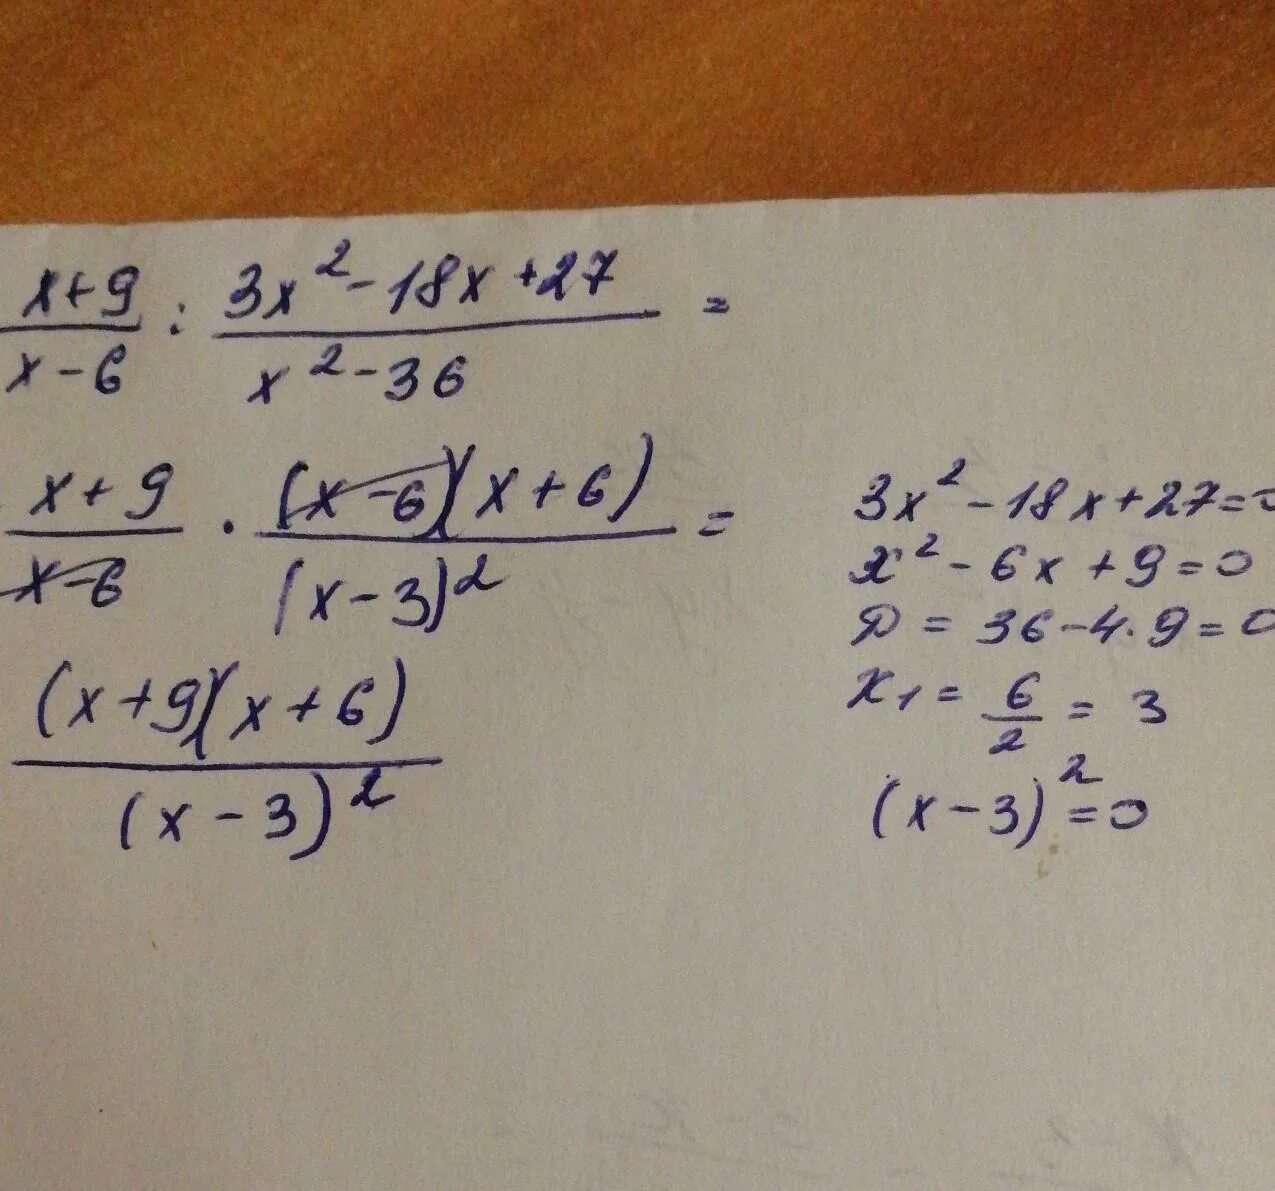 Упростить выражение x2-9/x-6 2 - 27 6x-x 2. X-9/x2-9 3/3x-x2 упростите выражение. 3/X+3+3/x2-3x+2x/9-x2 упростите выражение. X^3-9x^2+27x-27. 5 x 18 x 27 решите